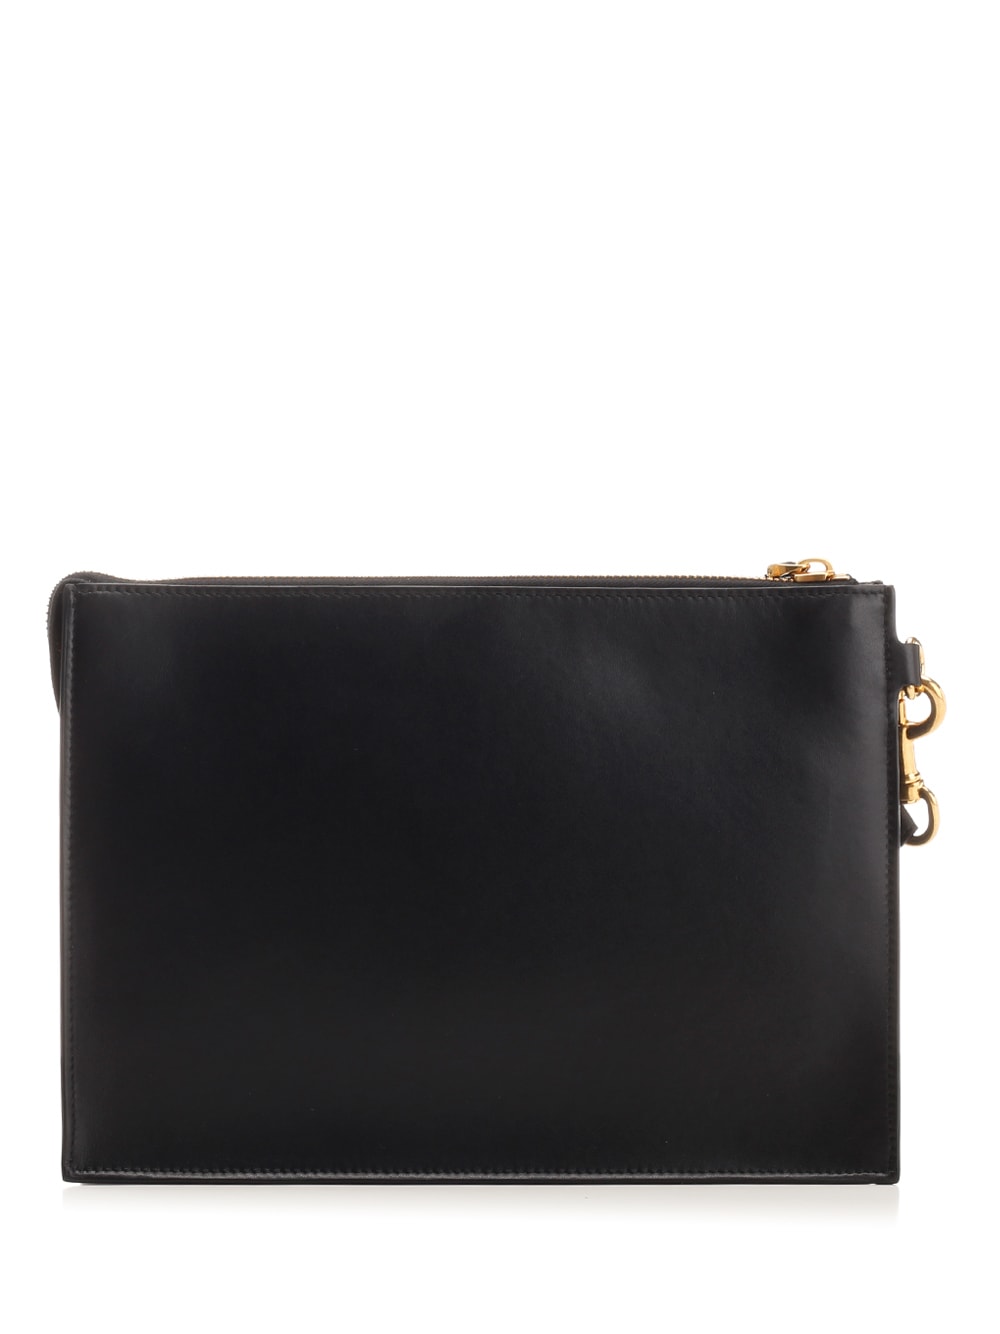 Shop Valentino Flat Black Leather Clutch Bag